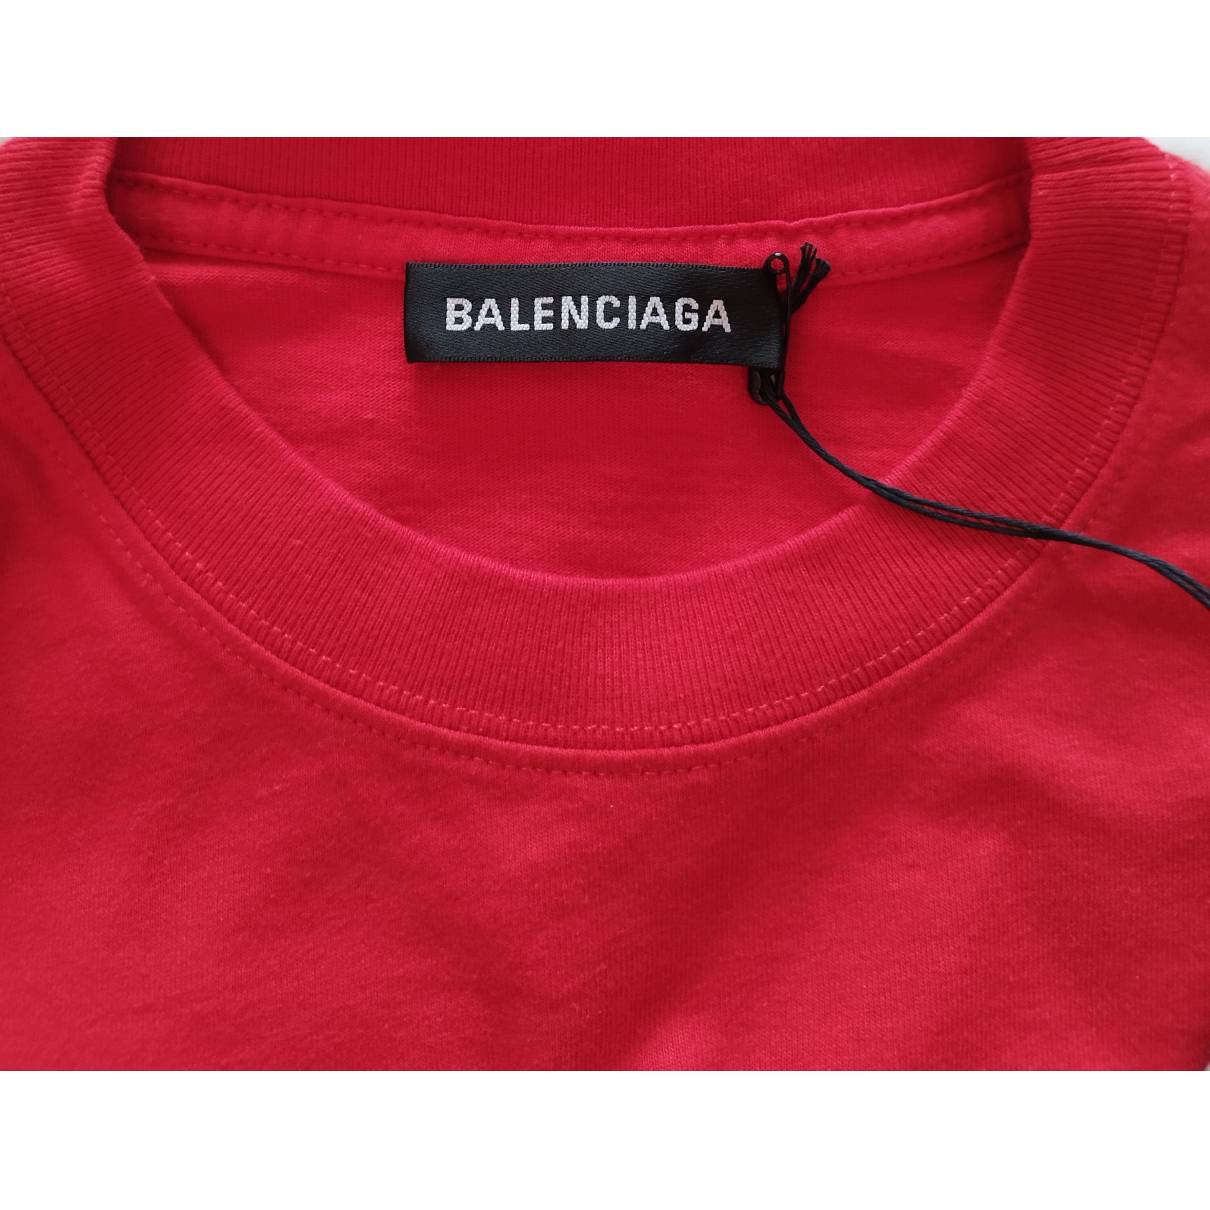 T-shirt Balenciaga Red size S International in Cotton - 31544272